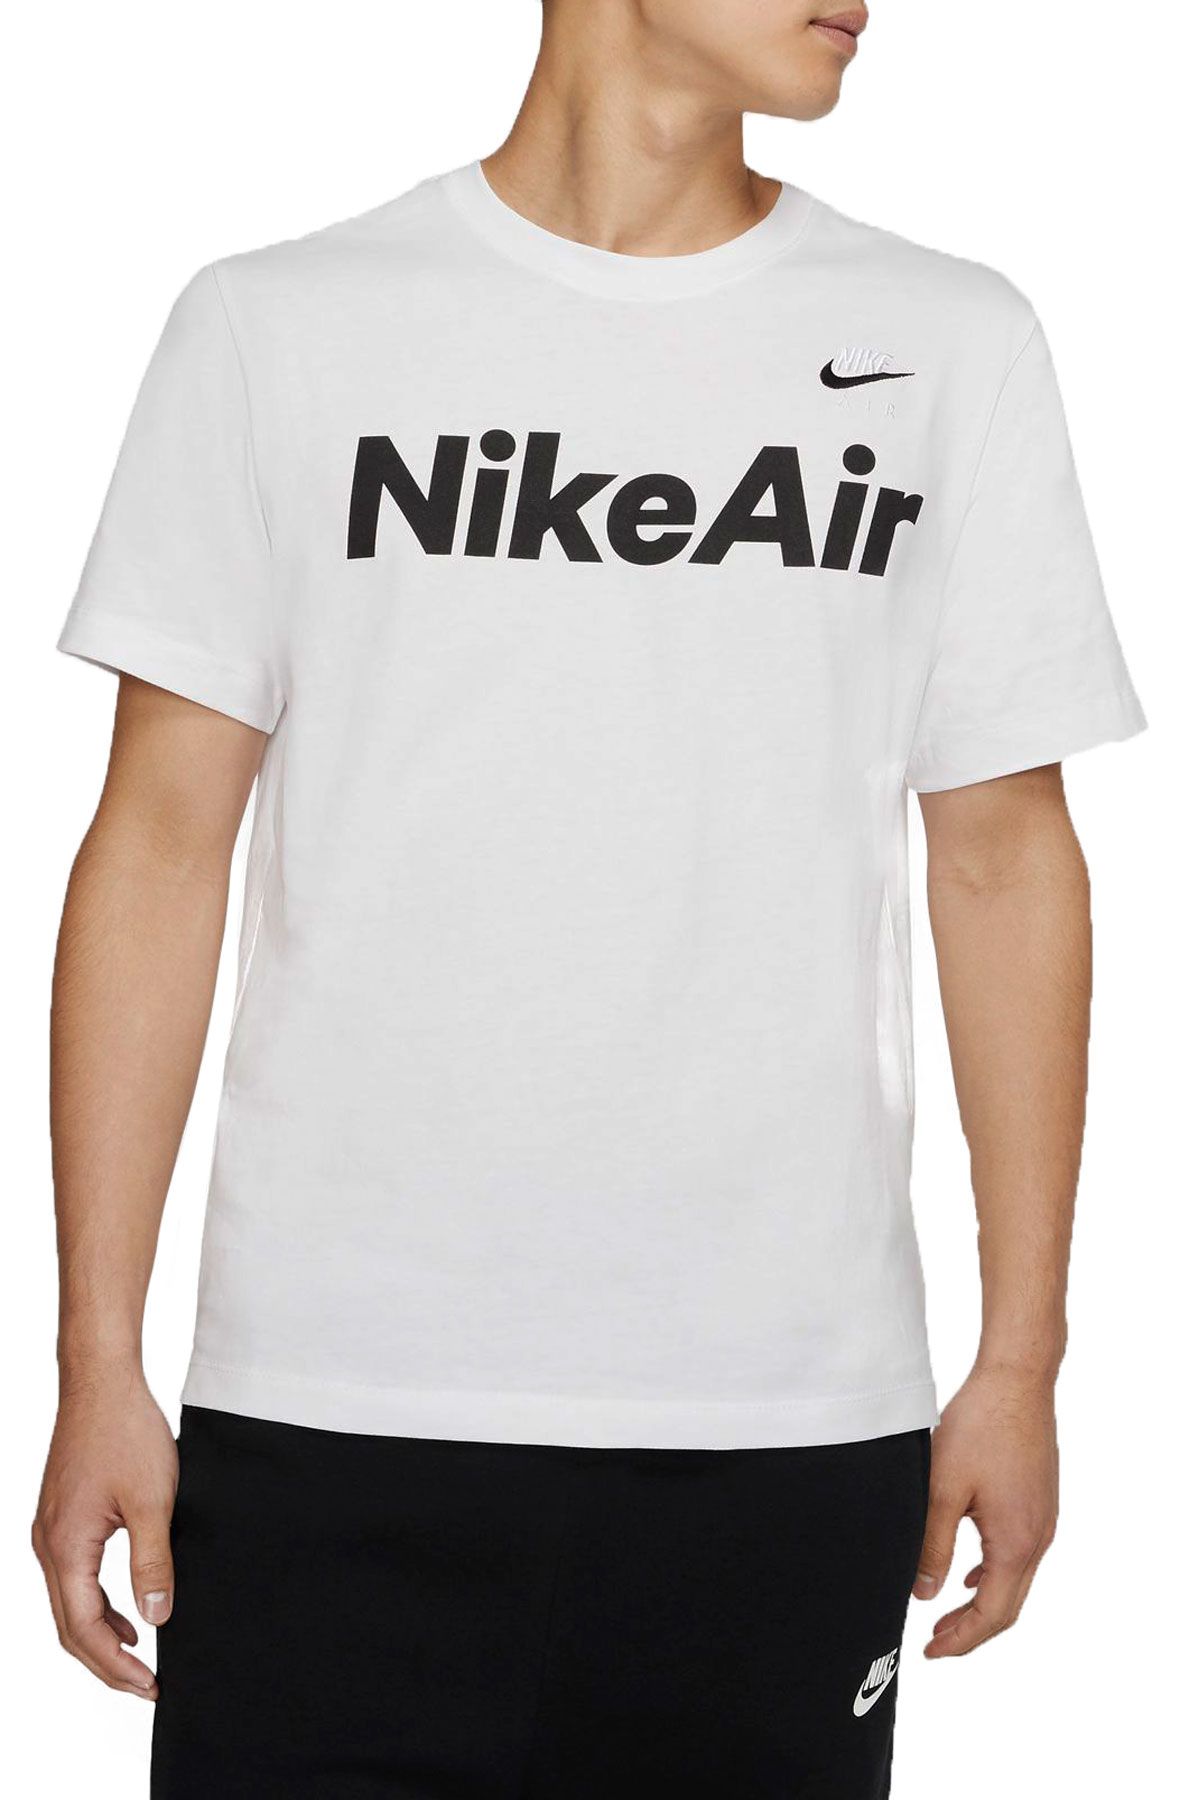 NIKE Air T-Shirt CK2232 100 - Shiekh